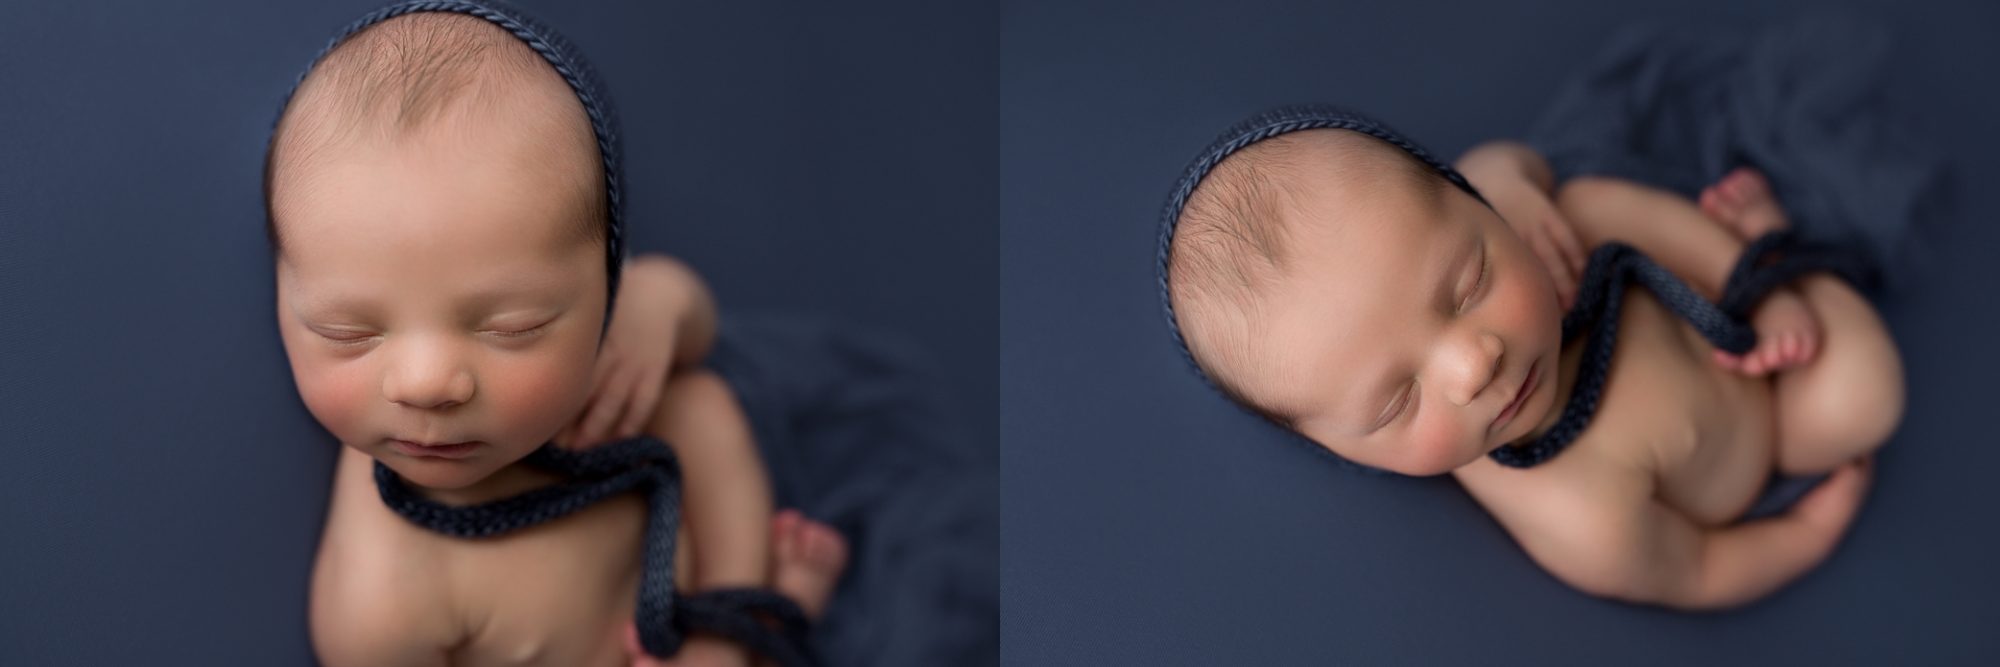 tacoma baby photographer | Newborn photography Seattle